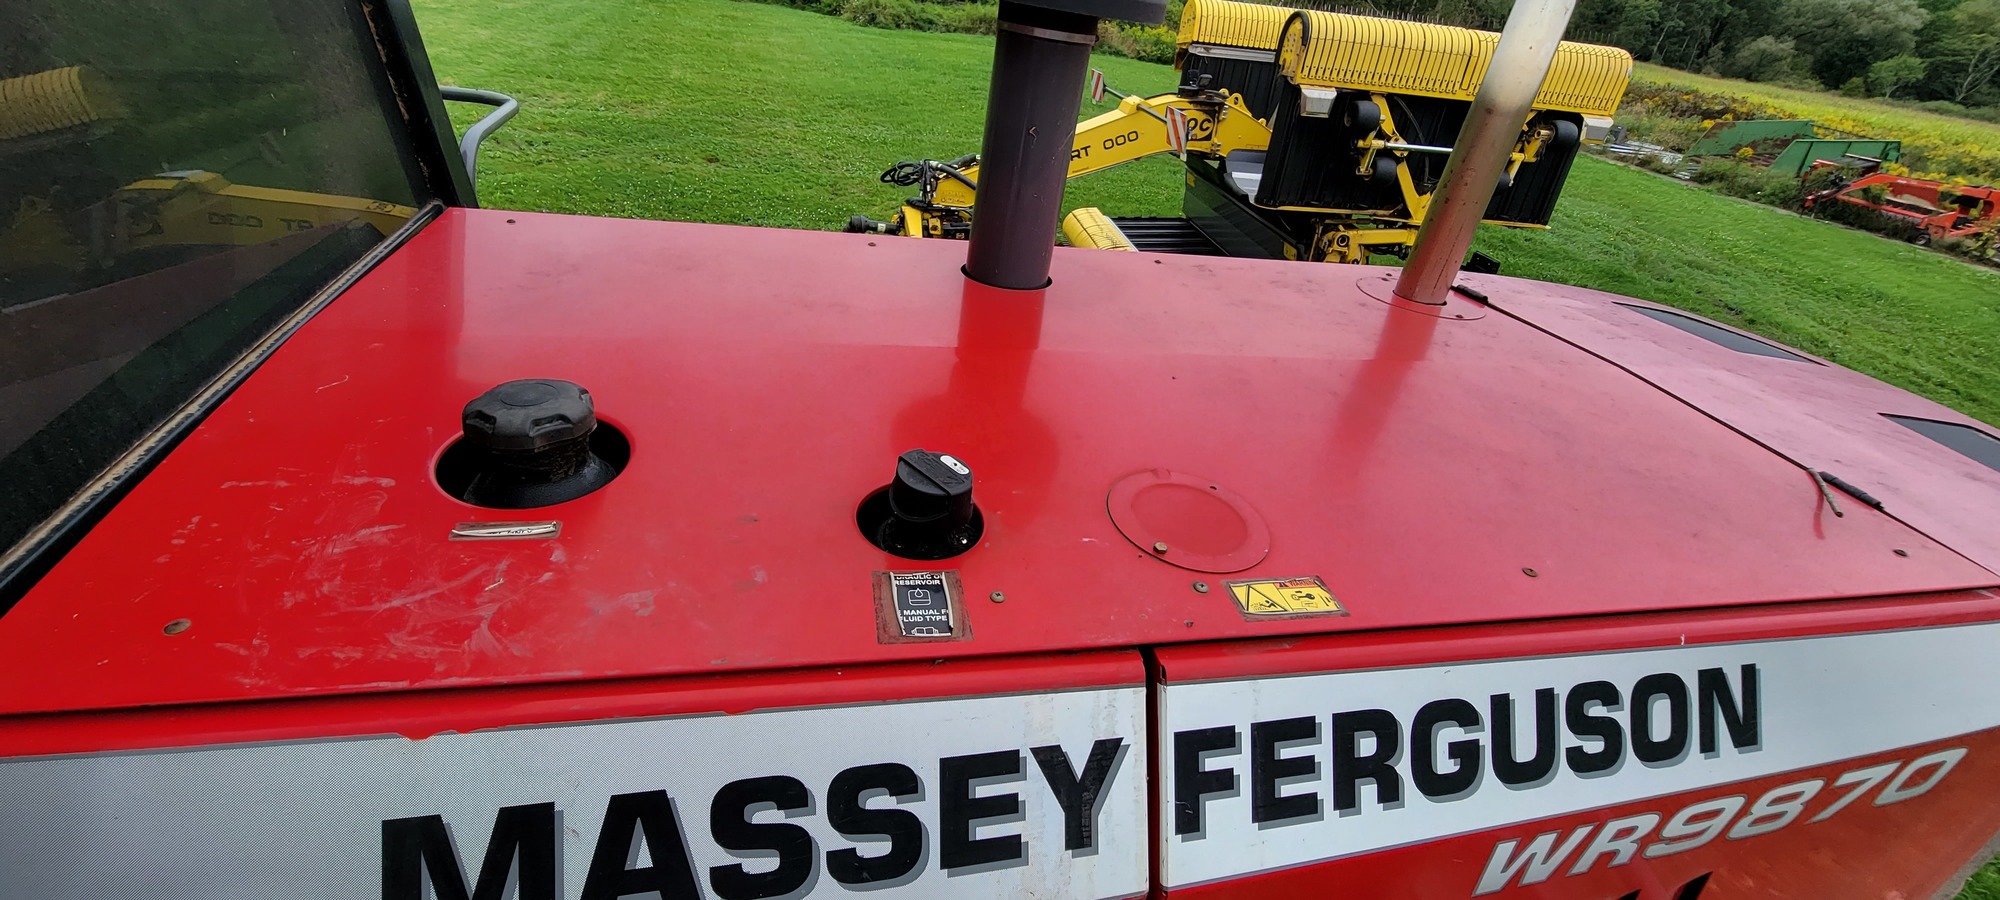 2016 MASSEY FERGUSON WR9870 Agriculture Equipment | Iron Listing